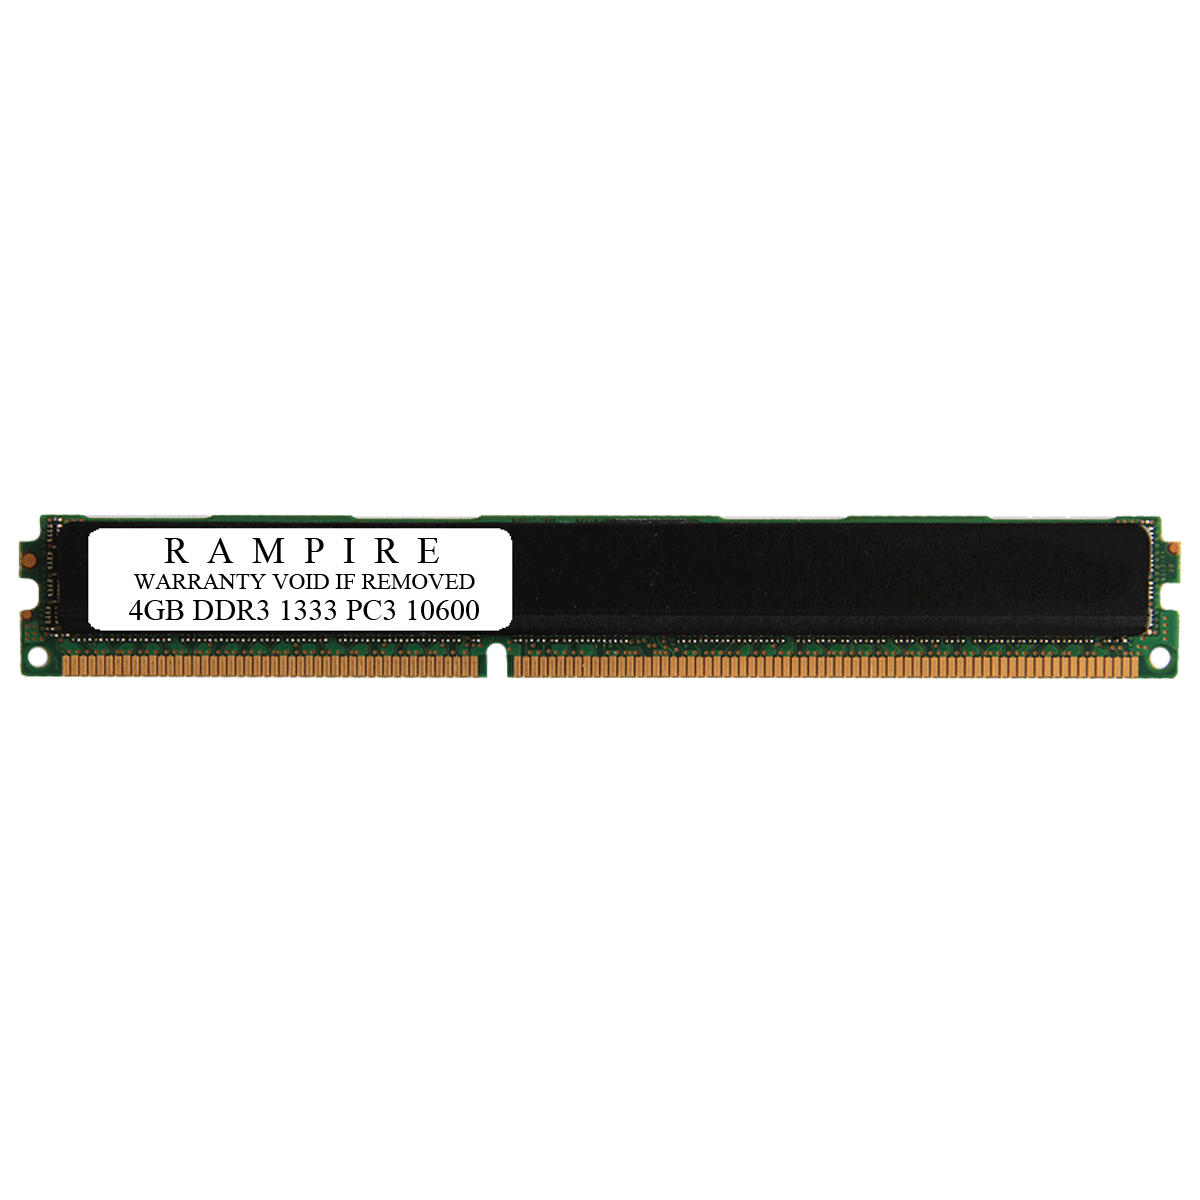 RAMPIRE 4GB DDR3 1333 (PC3 10600) 240-Pin SDRAM 2Rx8 VLP (Low Profile) 1.5V ECC Registered Server Memory